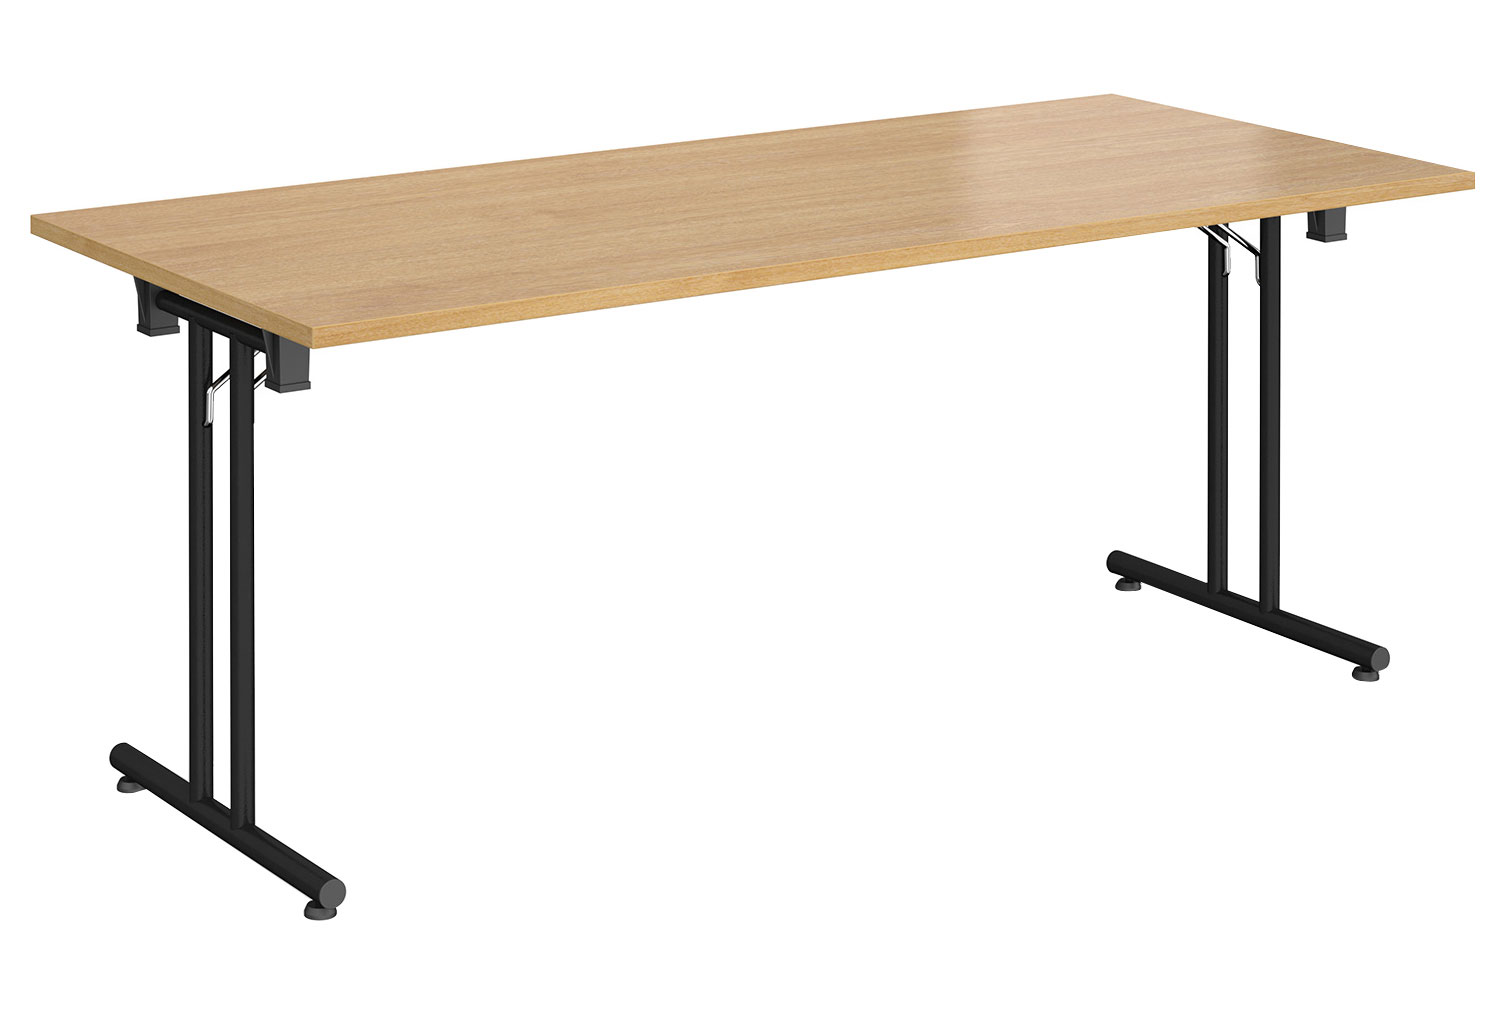 Ziegler Rectangular Folding Table, 180wx80dx73h (cm), Oak